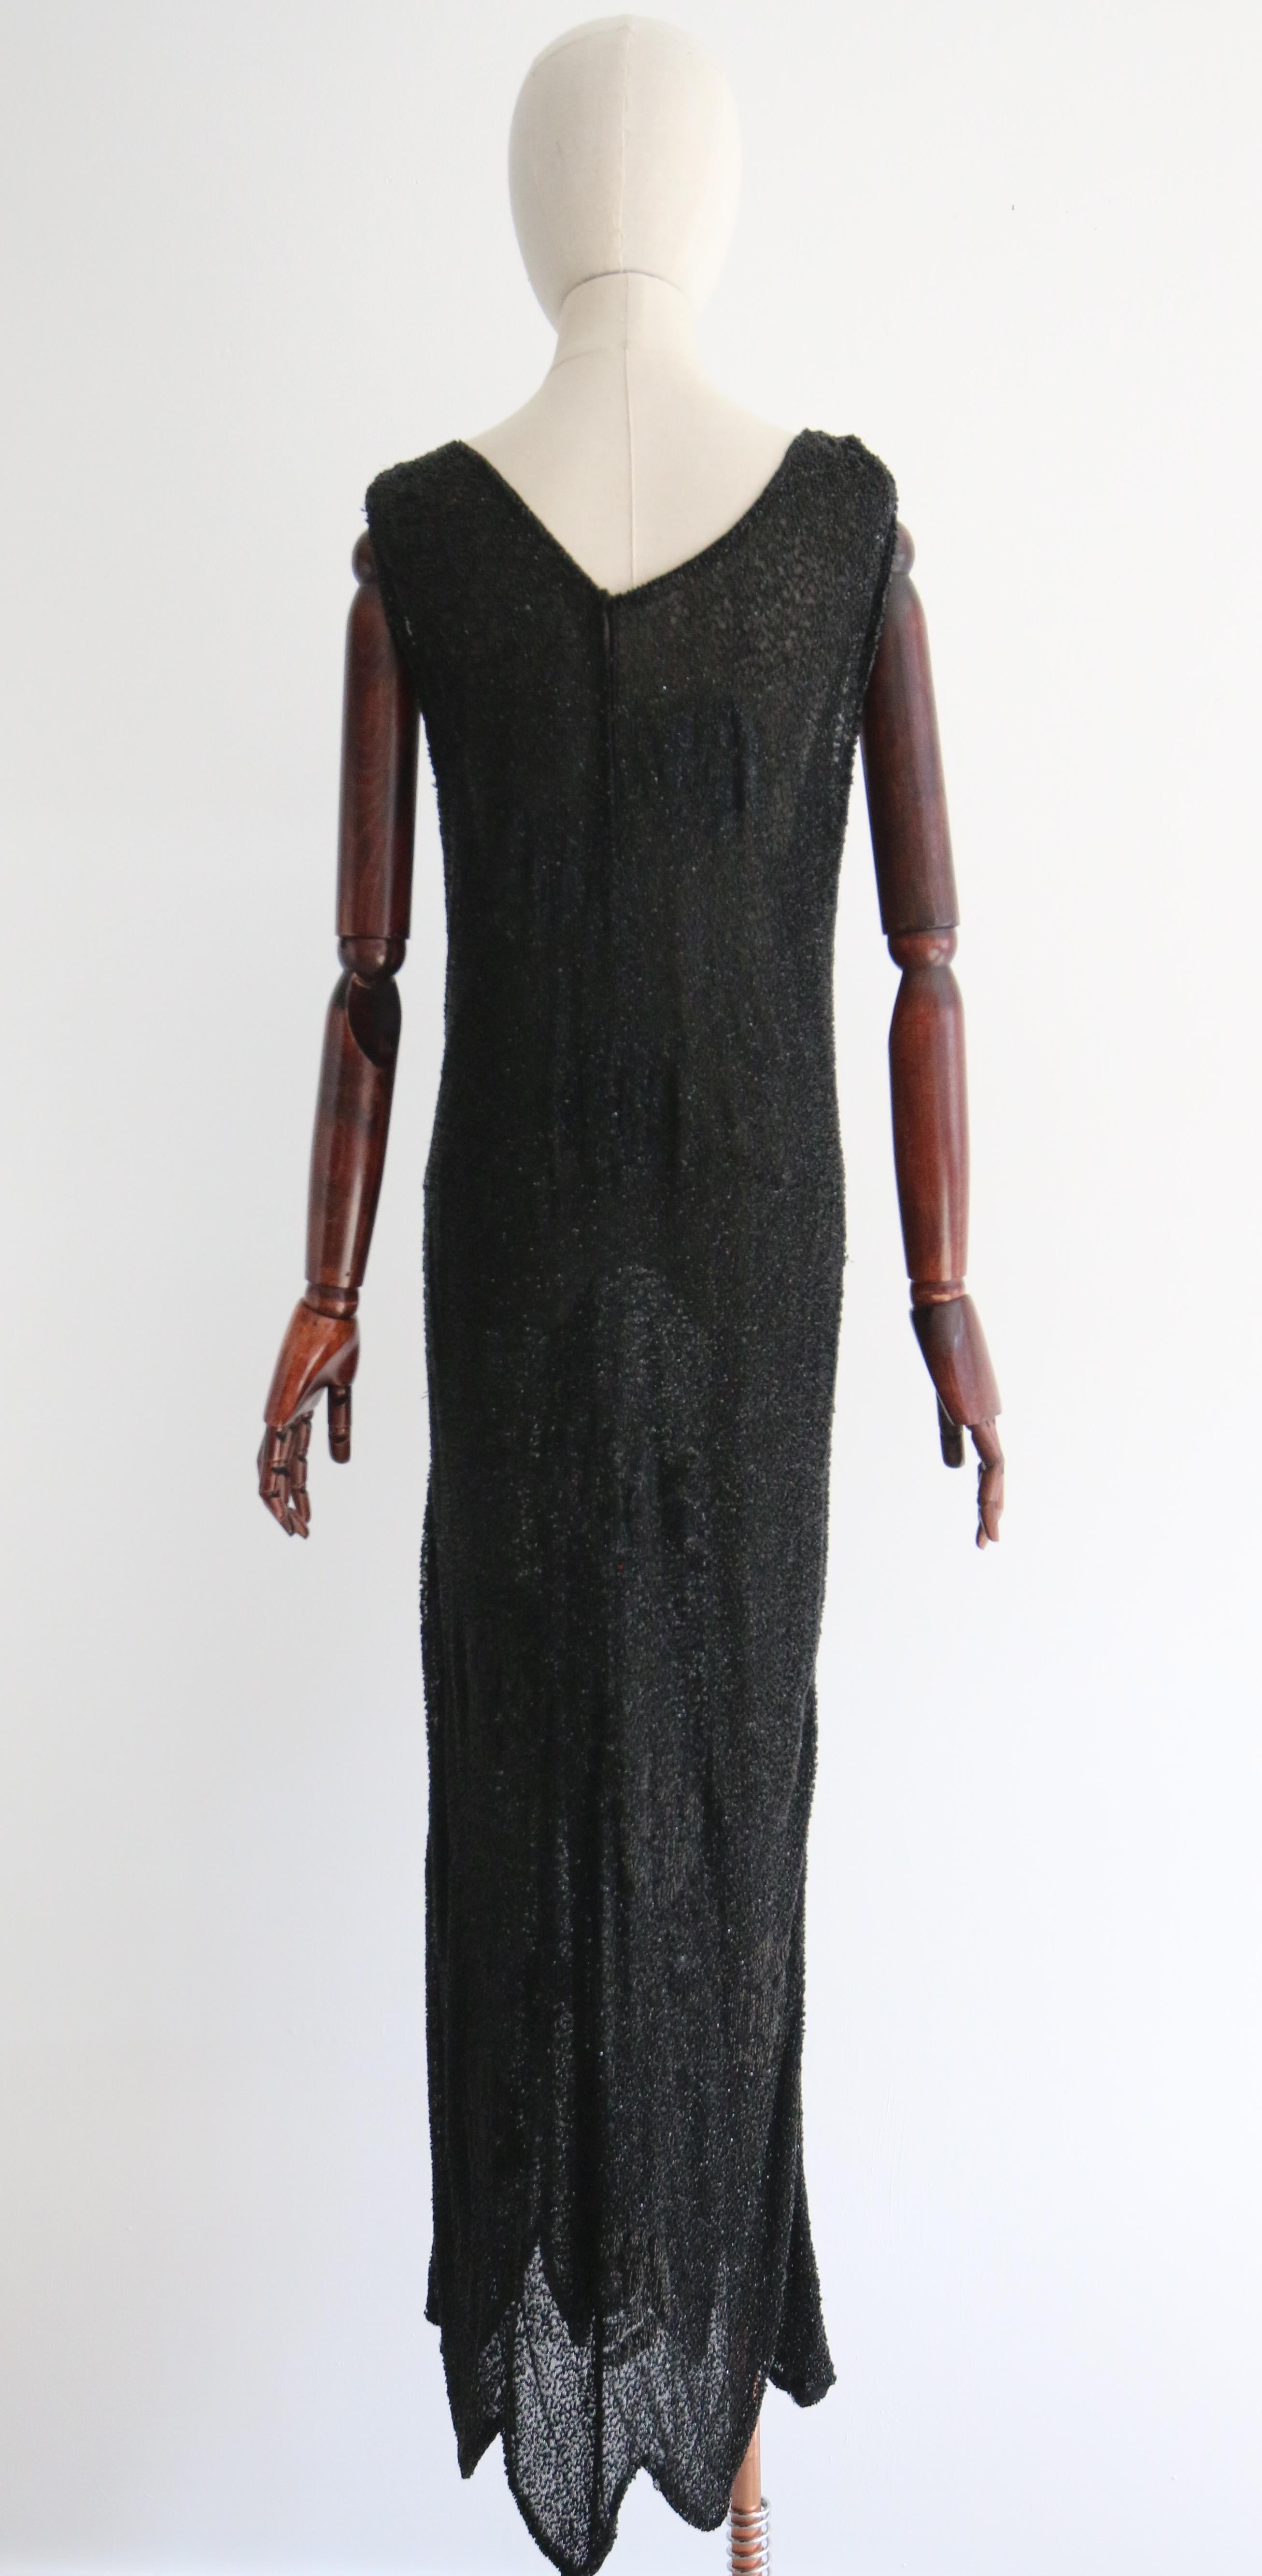 Vintage 1920's Black Beaded Evening Dress UK 12-14 US 8-10 3